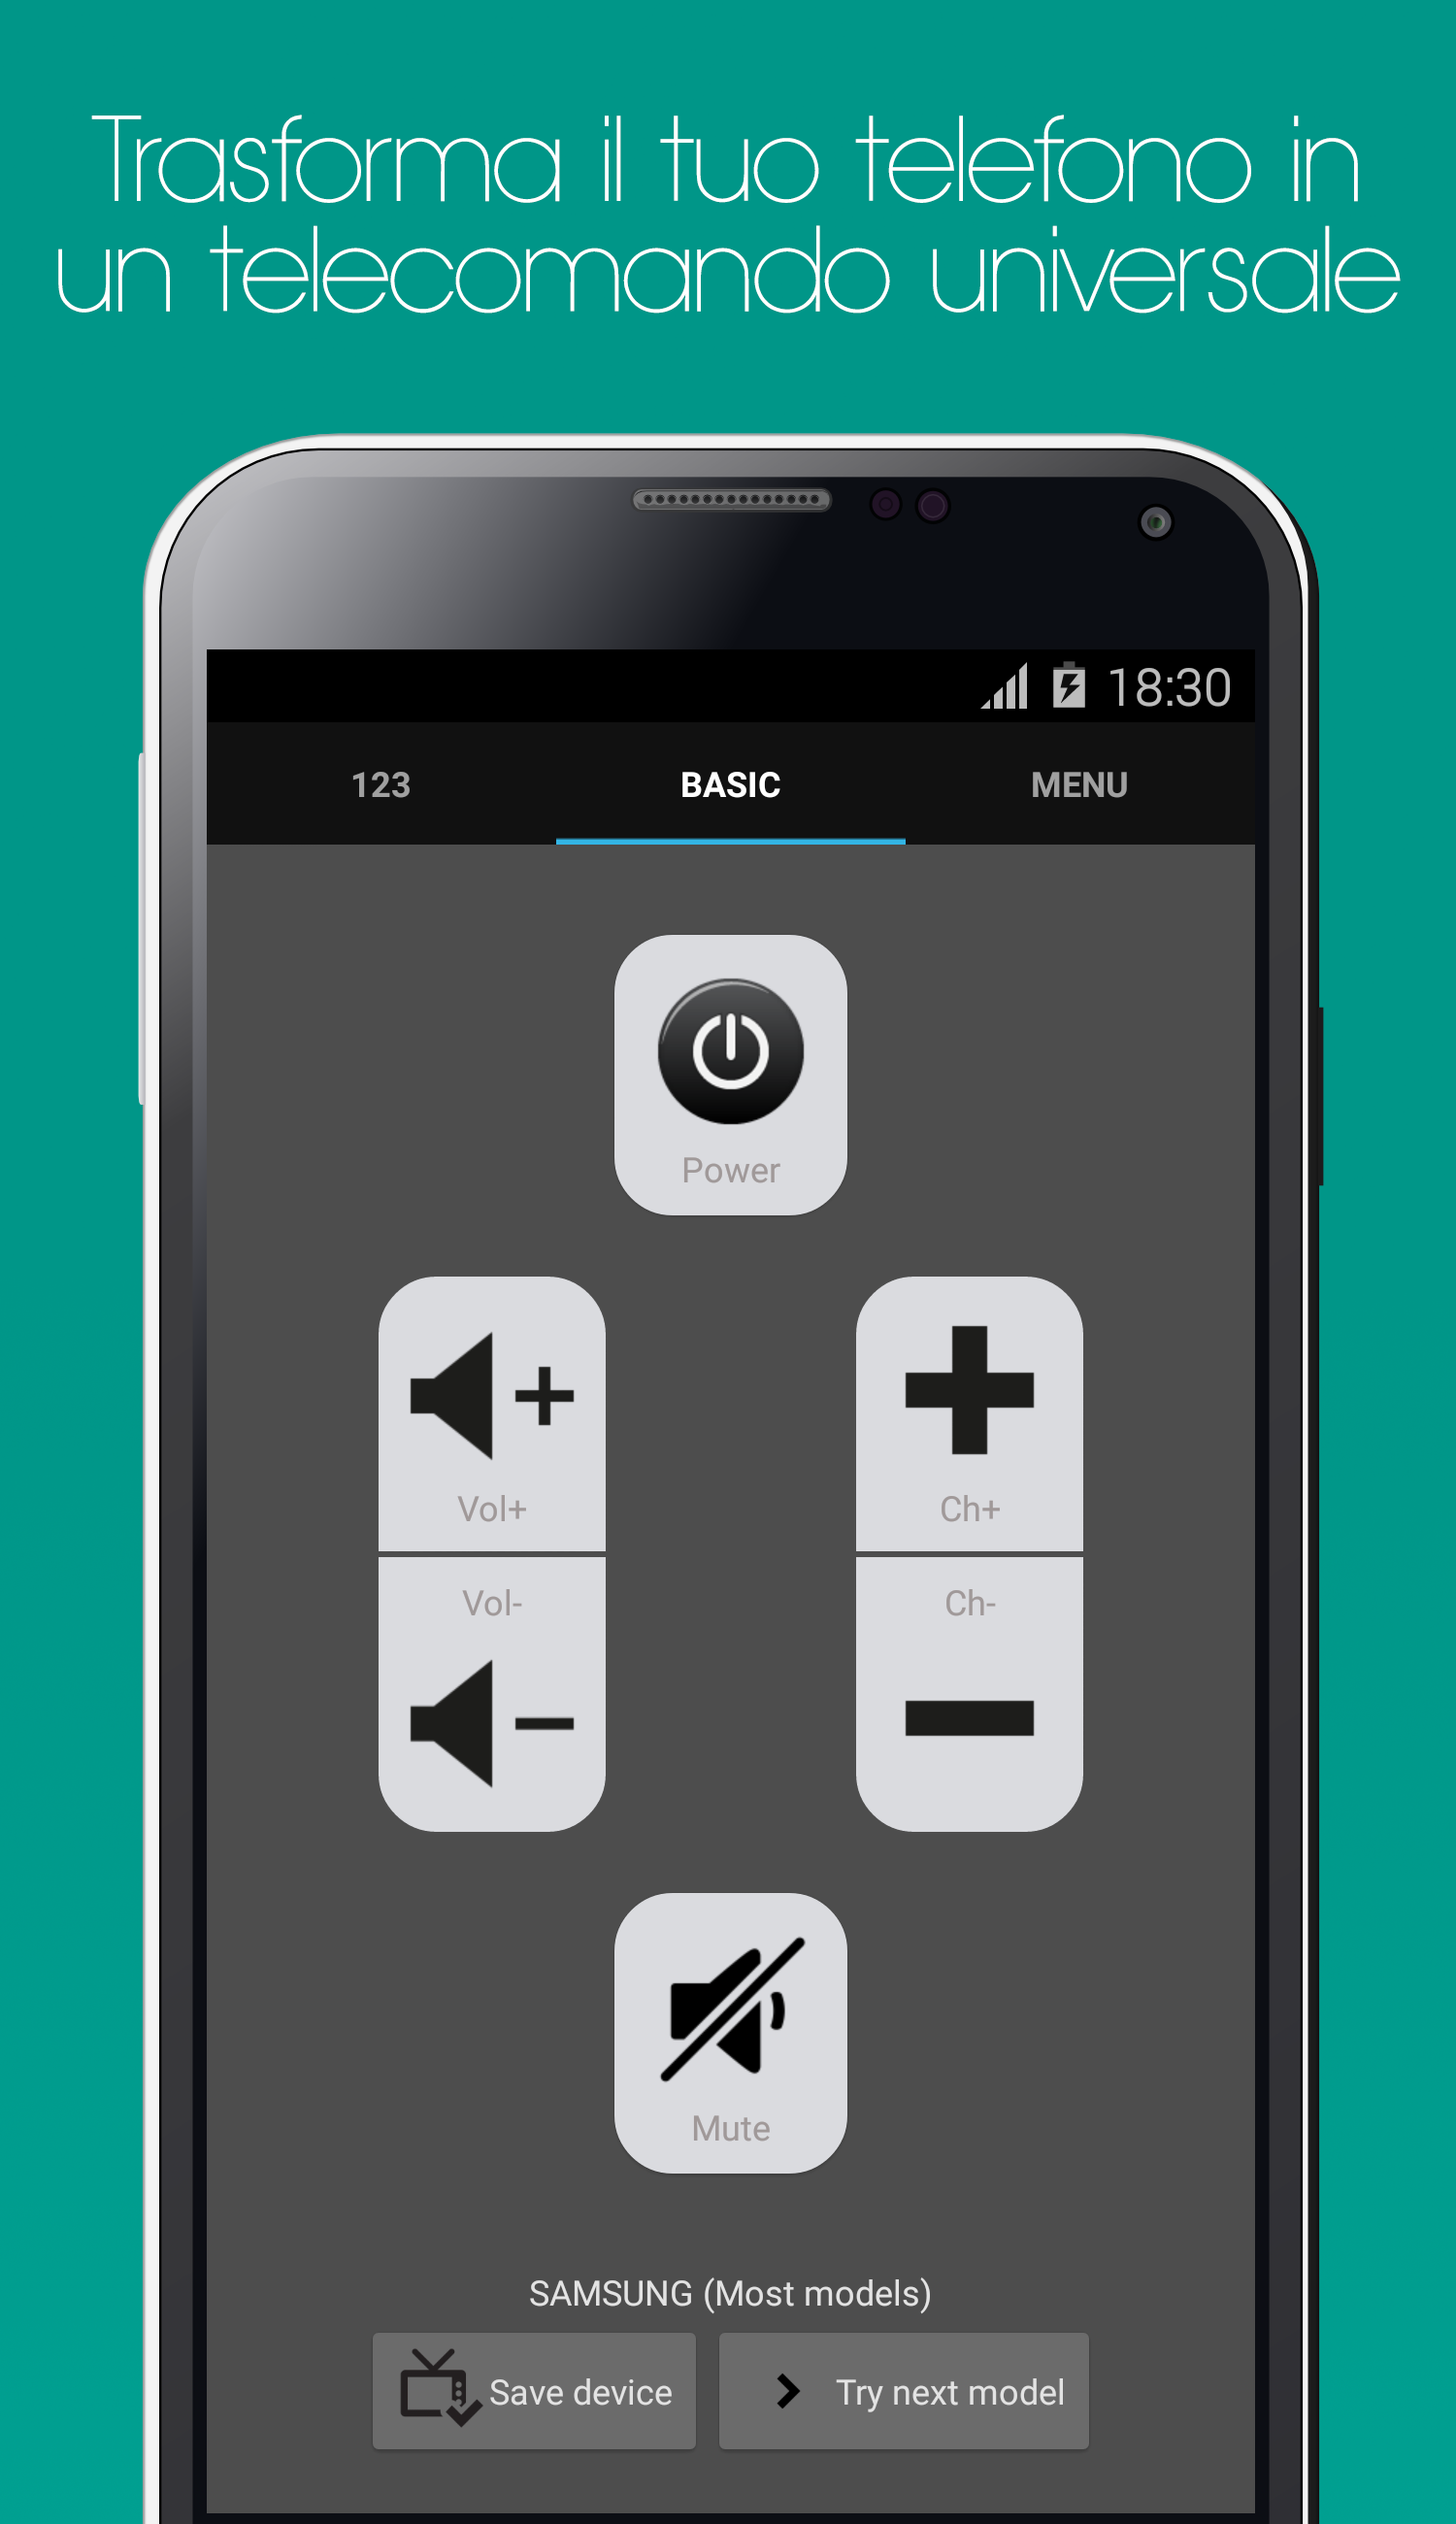 Android application Galaxy Universal Remote screenshort